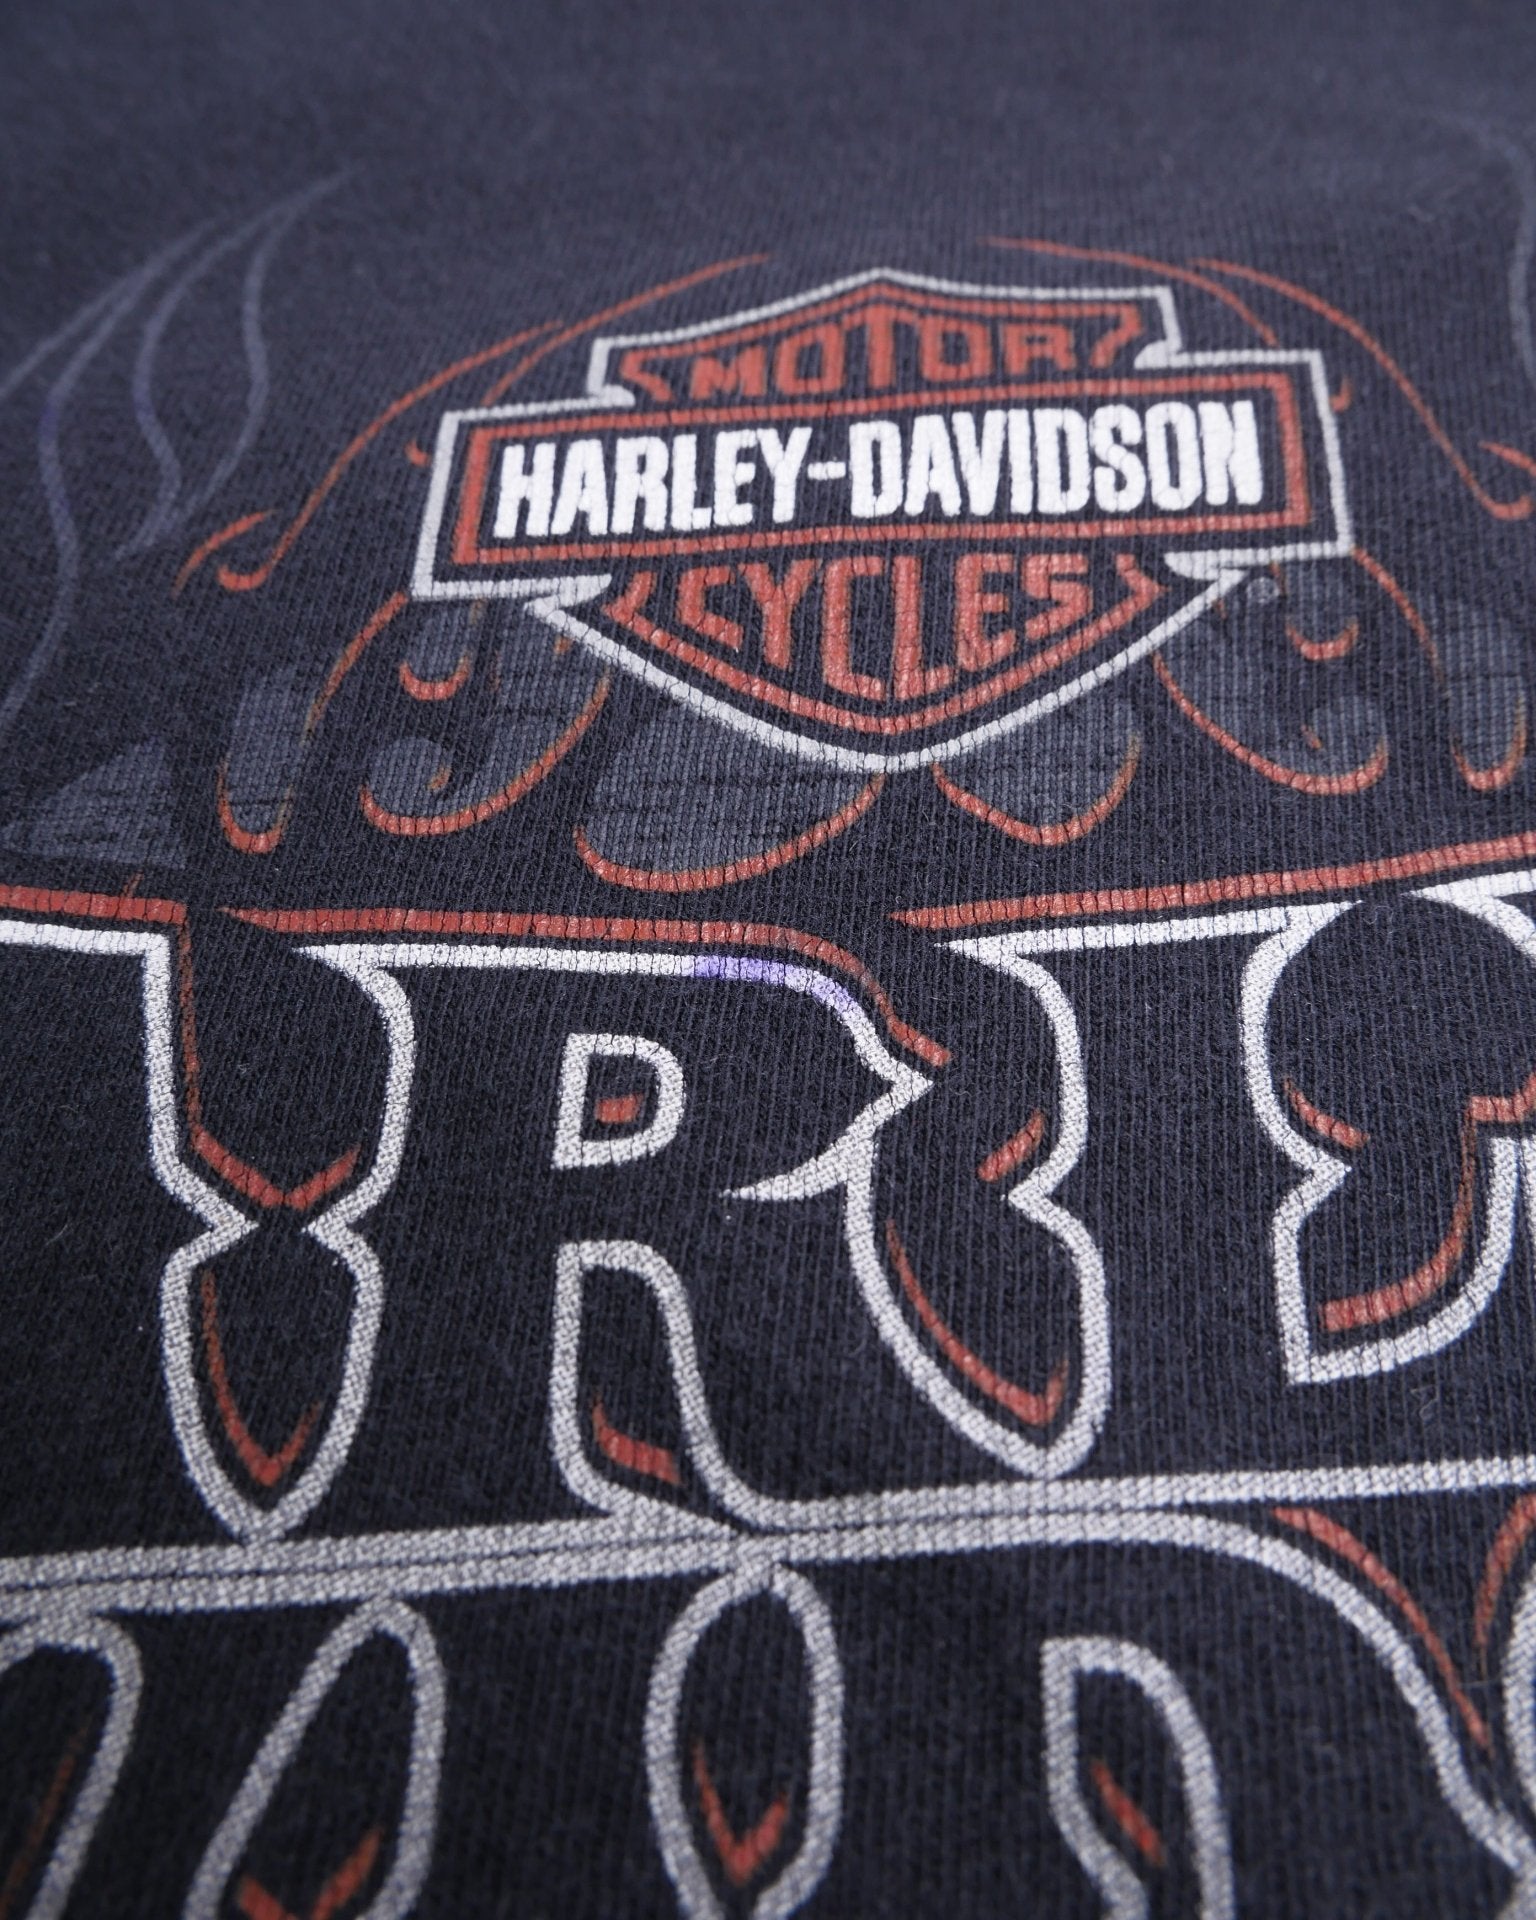 Harley Davidson printed 'Georgia' Graphic Vintage Shirt - Peeces